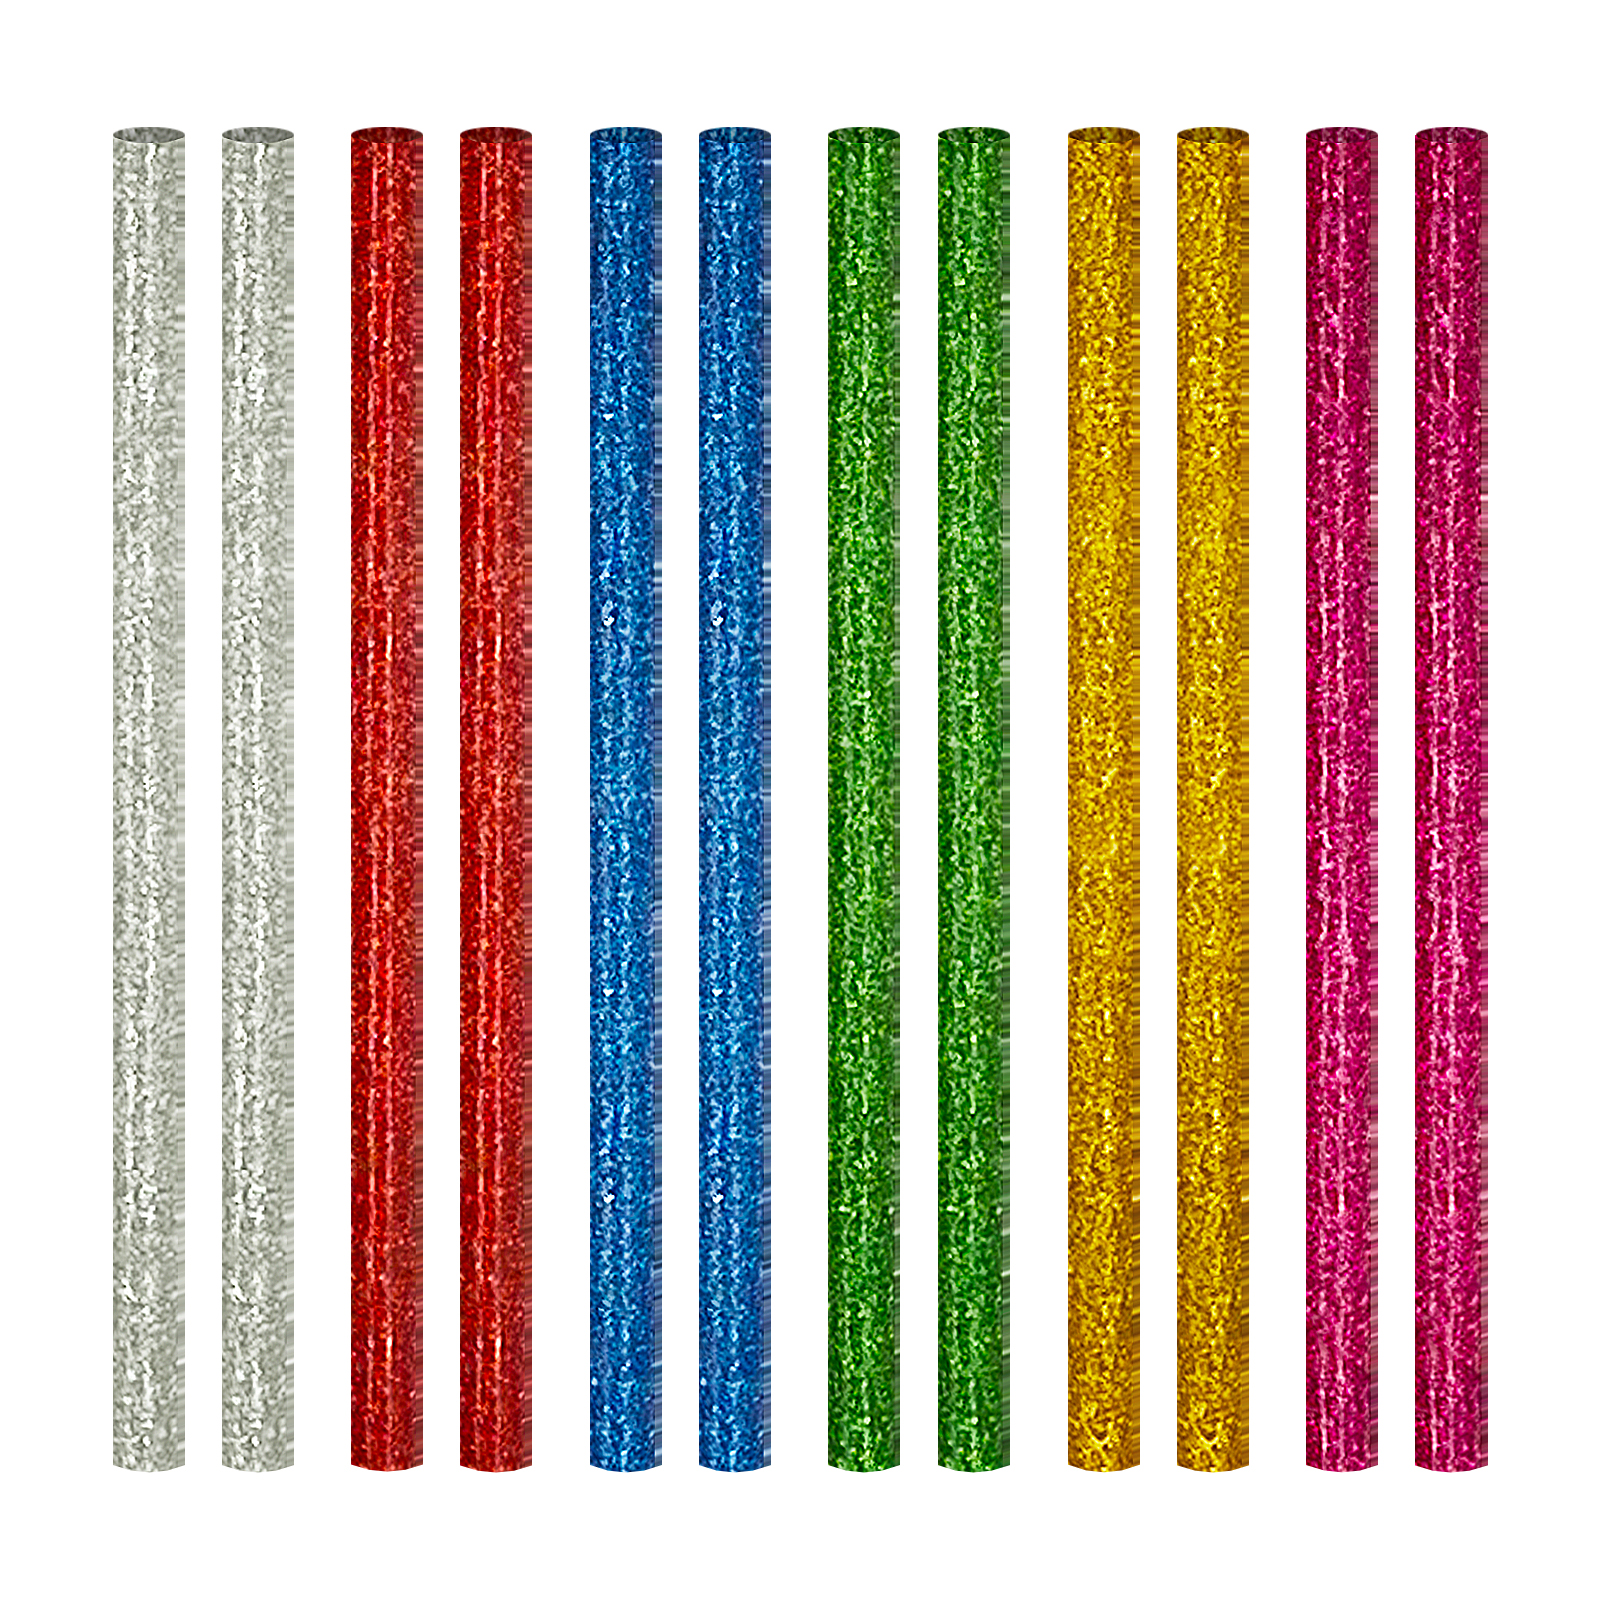 NewtonTech Mini Glitter Colorful Hot Glue Gun Sticks 150PCS,15 Colors for  DIY Art Craft, Wood Glass Card Fabric Plastic School DIY Sealing Projects